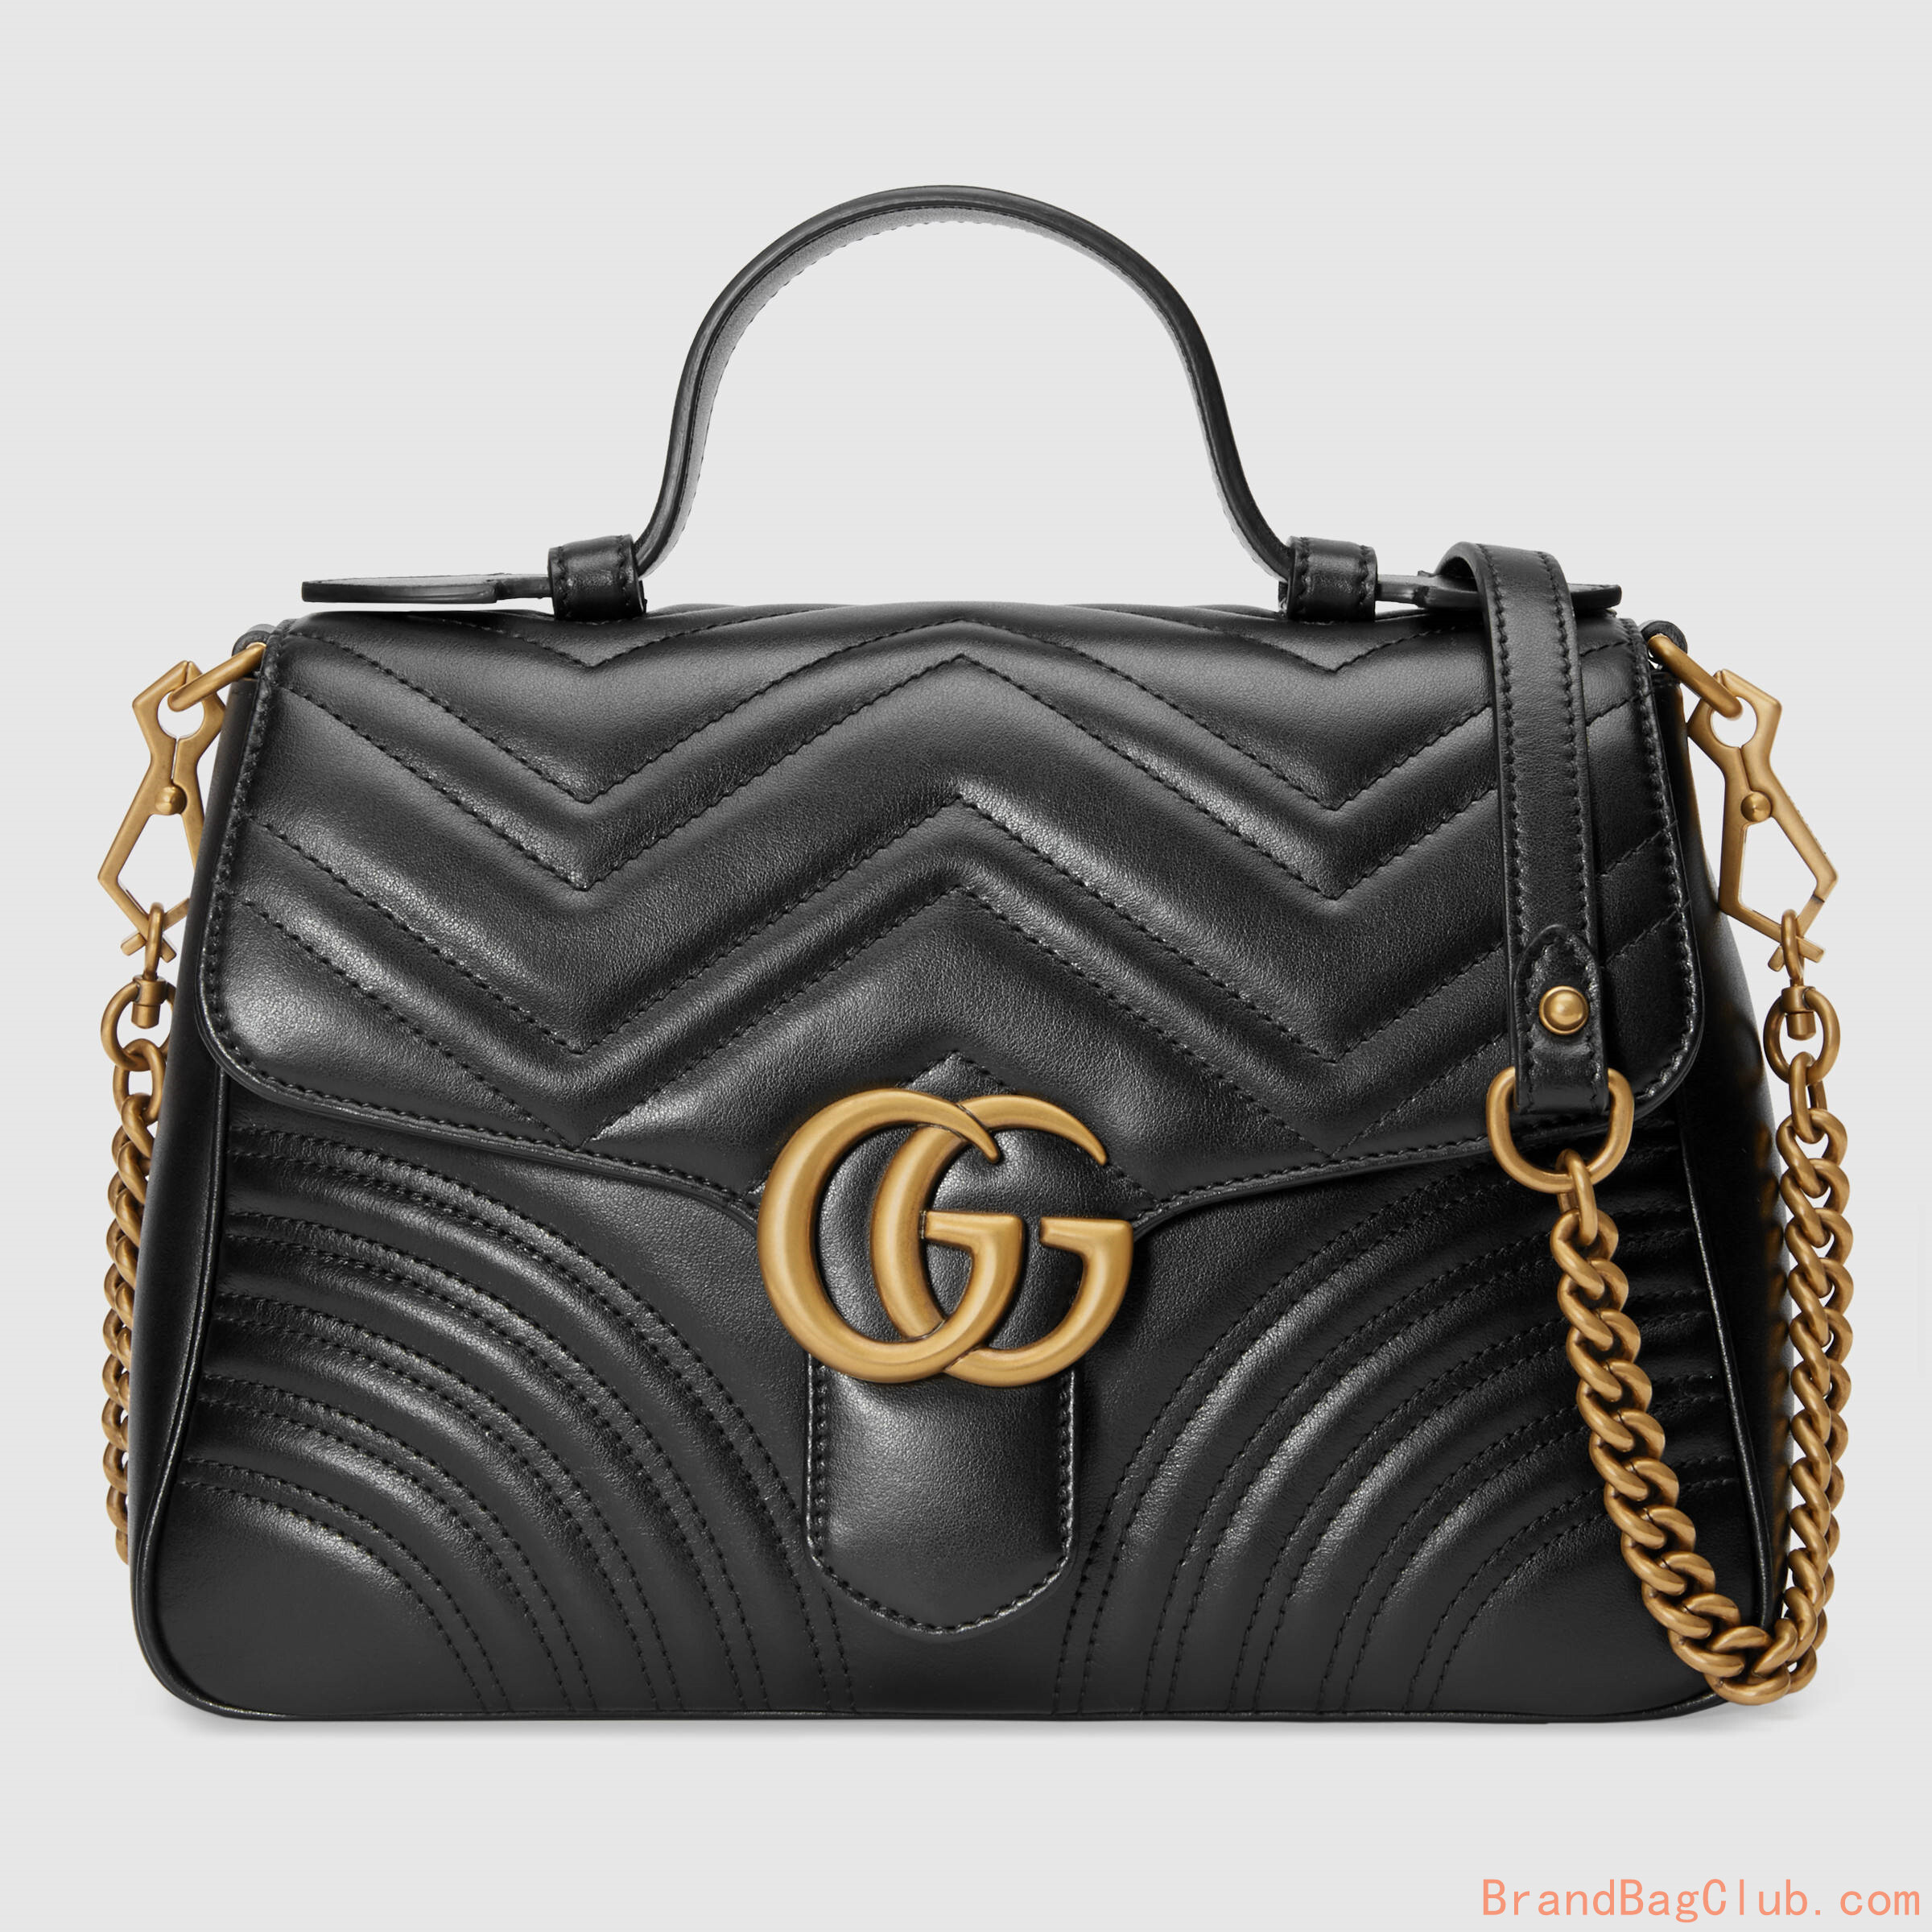 Gucci Ladies Bags In Pakistan | IQS Executive